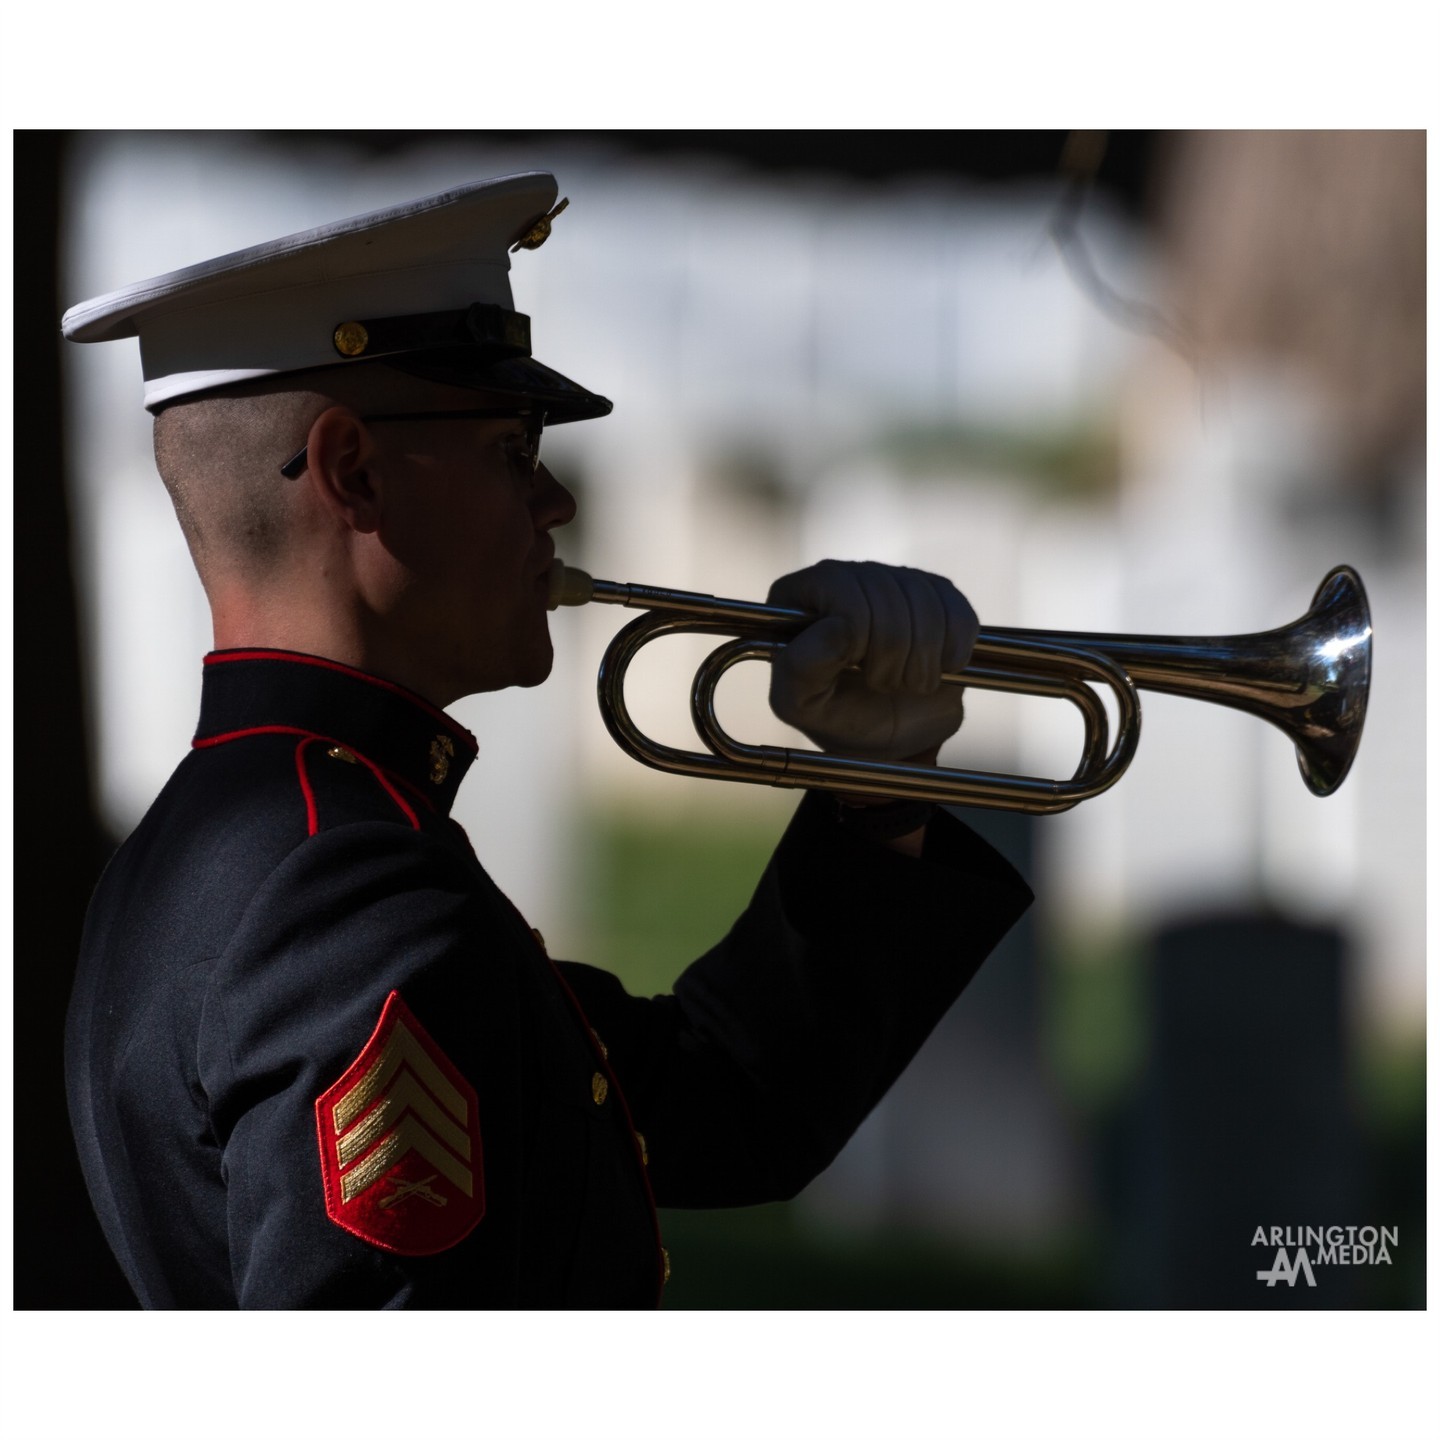 Happy 246th Birthday to the United States Marine Corps from our @arlingtonmedia team! 

@marines @marinebarrackswashington @usmarineband